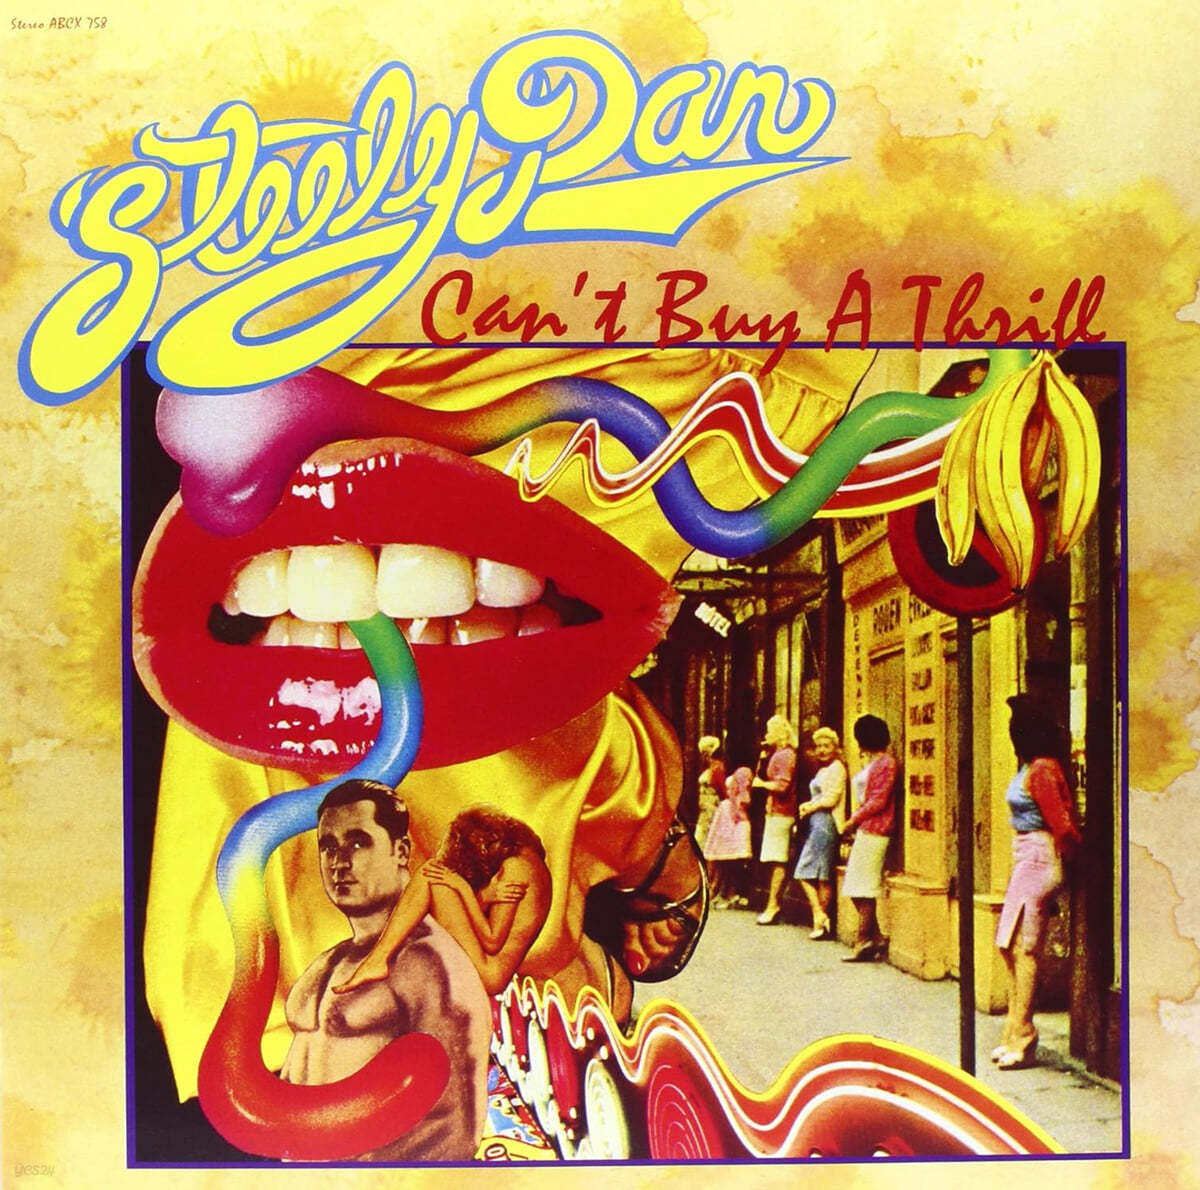 Steely Dan (스틸리 댄) - Can't Buy A Thrill [LP]